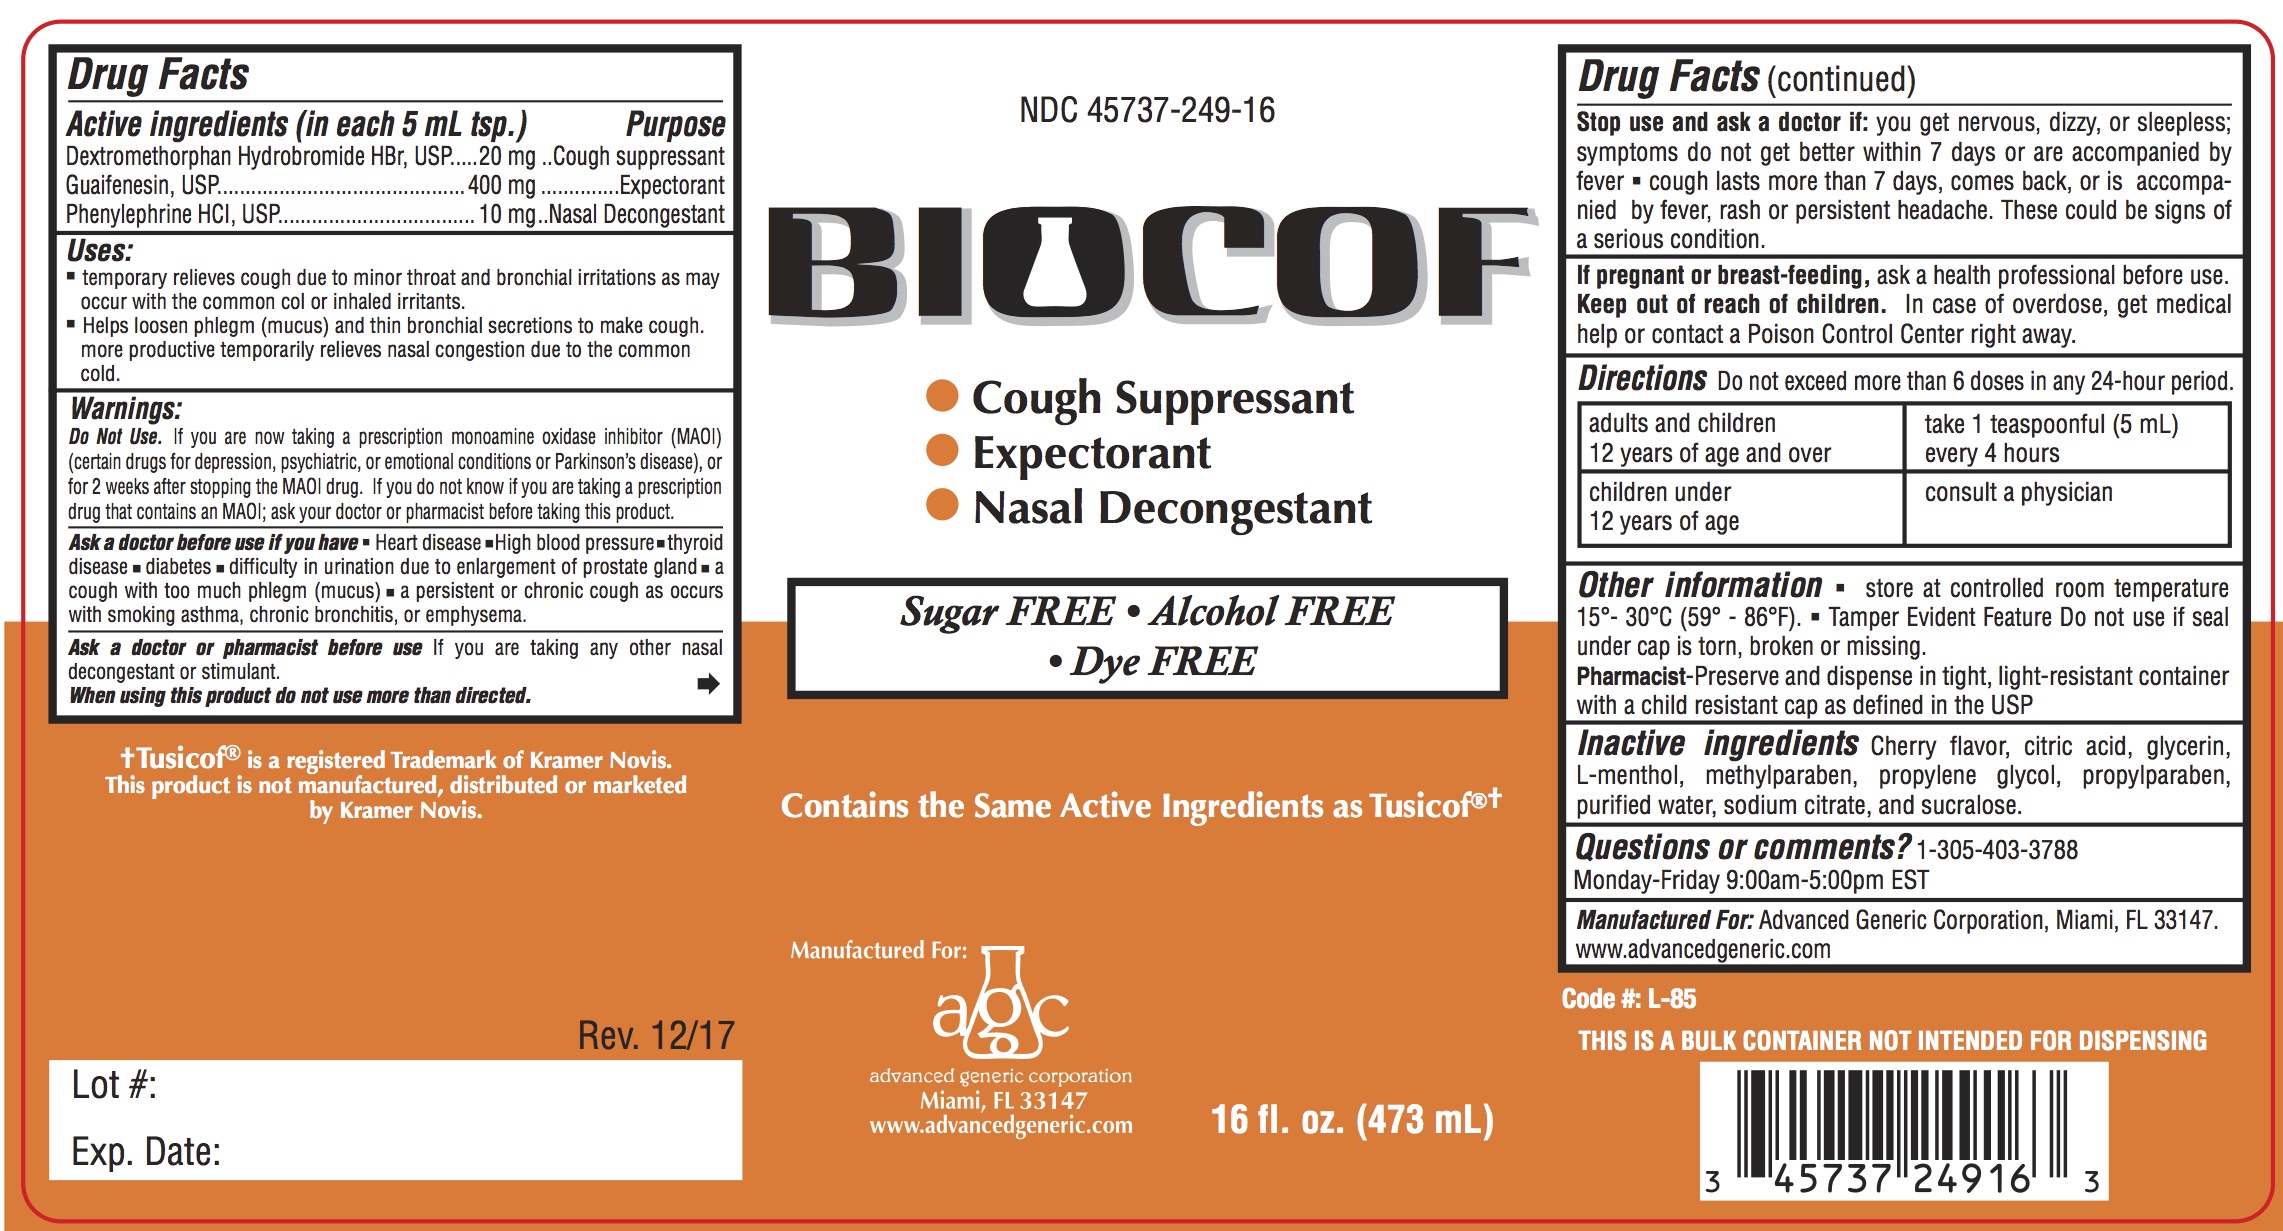 biocof label